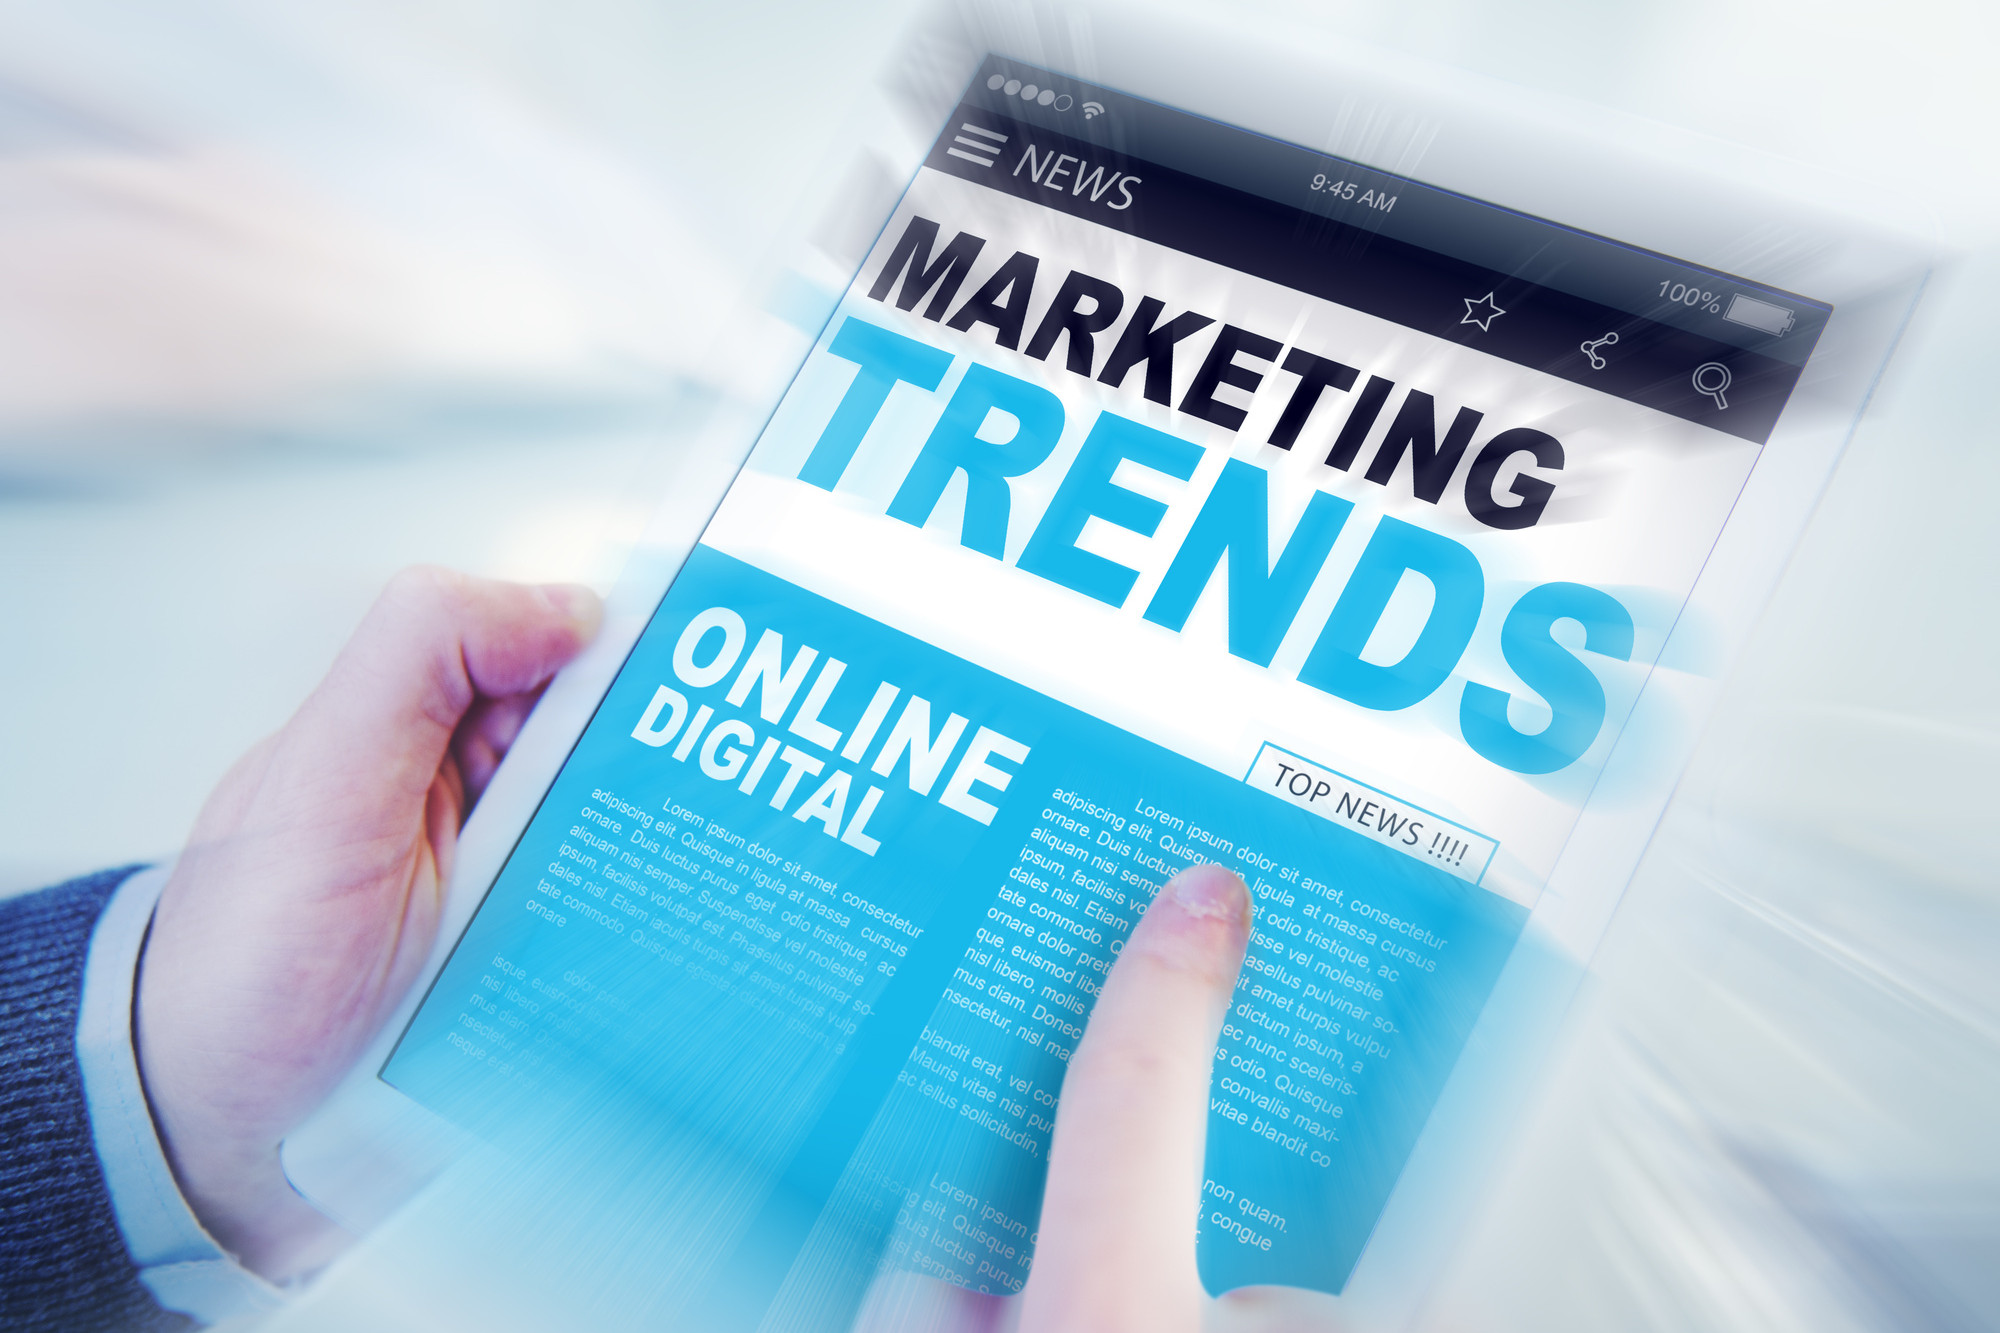 Digital marketing trends for 2016